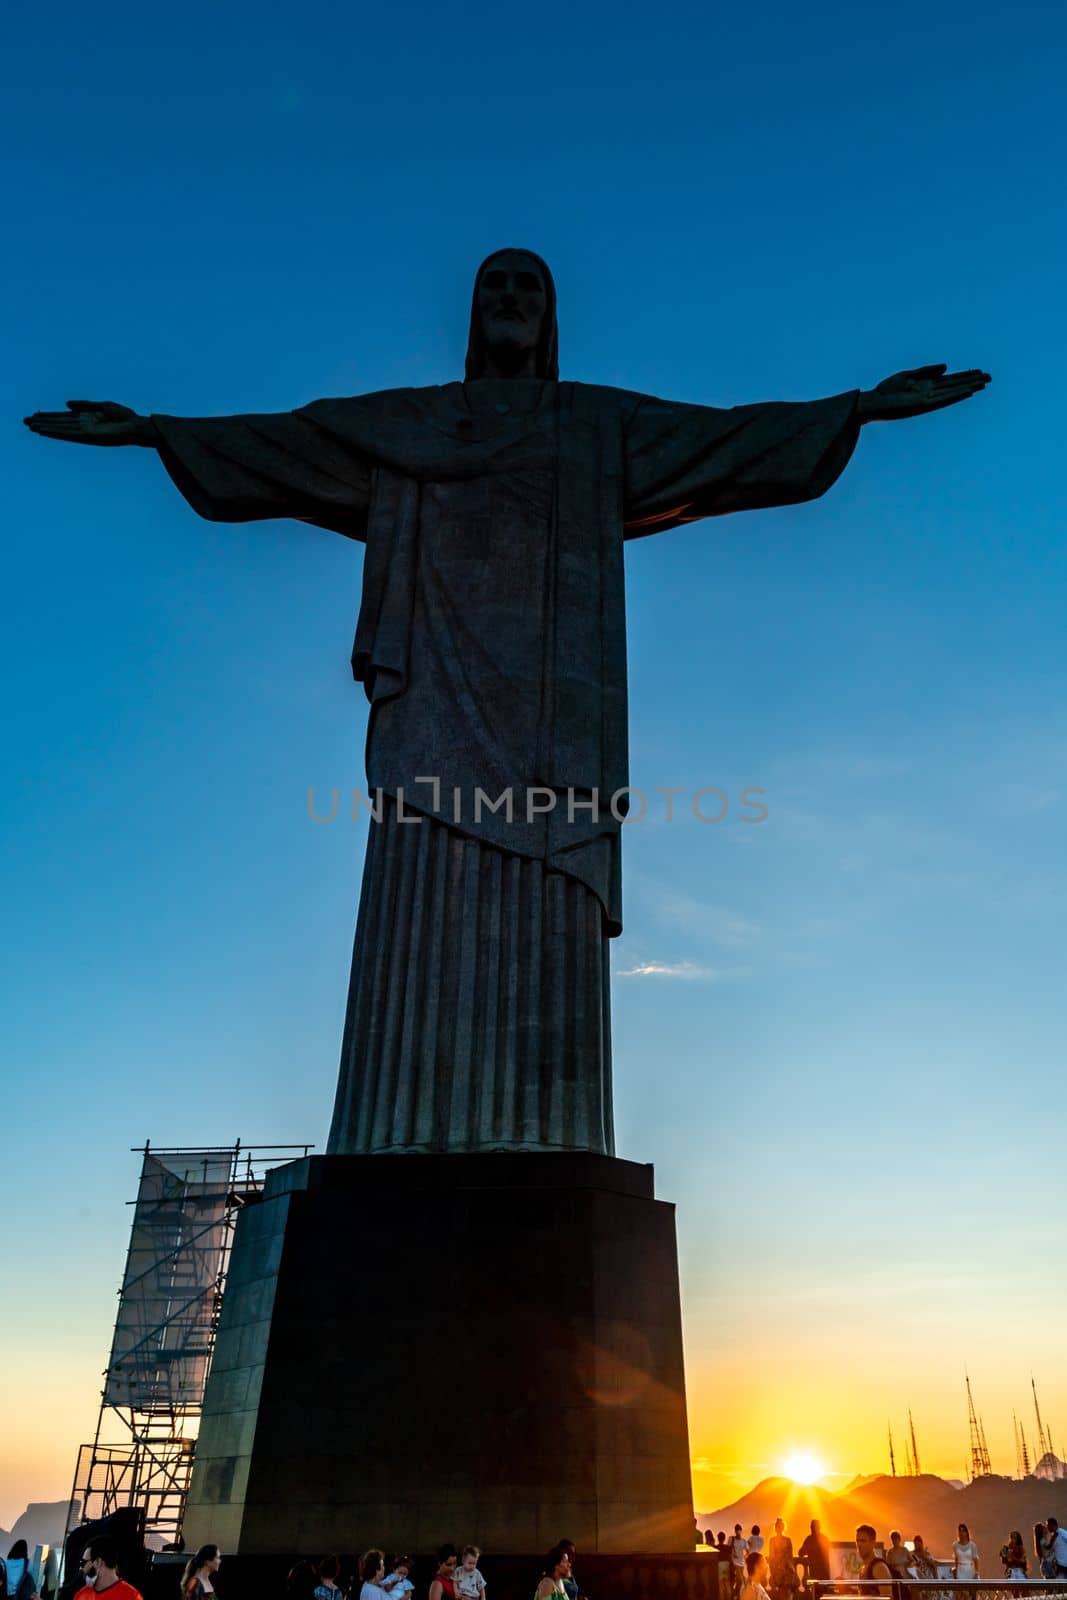 Rio de Janeiro - March 10, 2022: Statue of Christ the Redeemer in Rio de Janeiro, Brazil.  by Edophoto